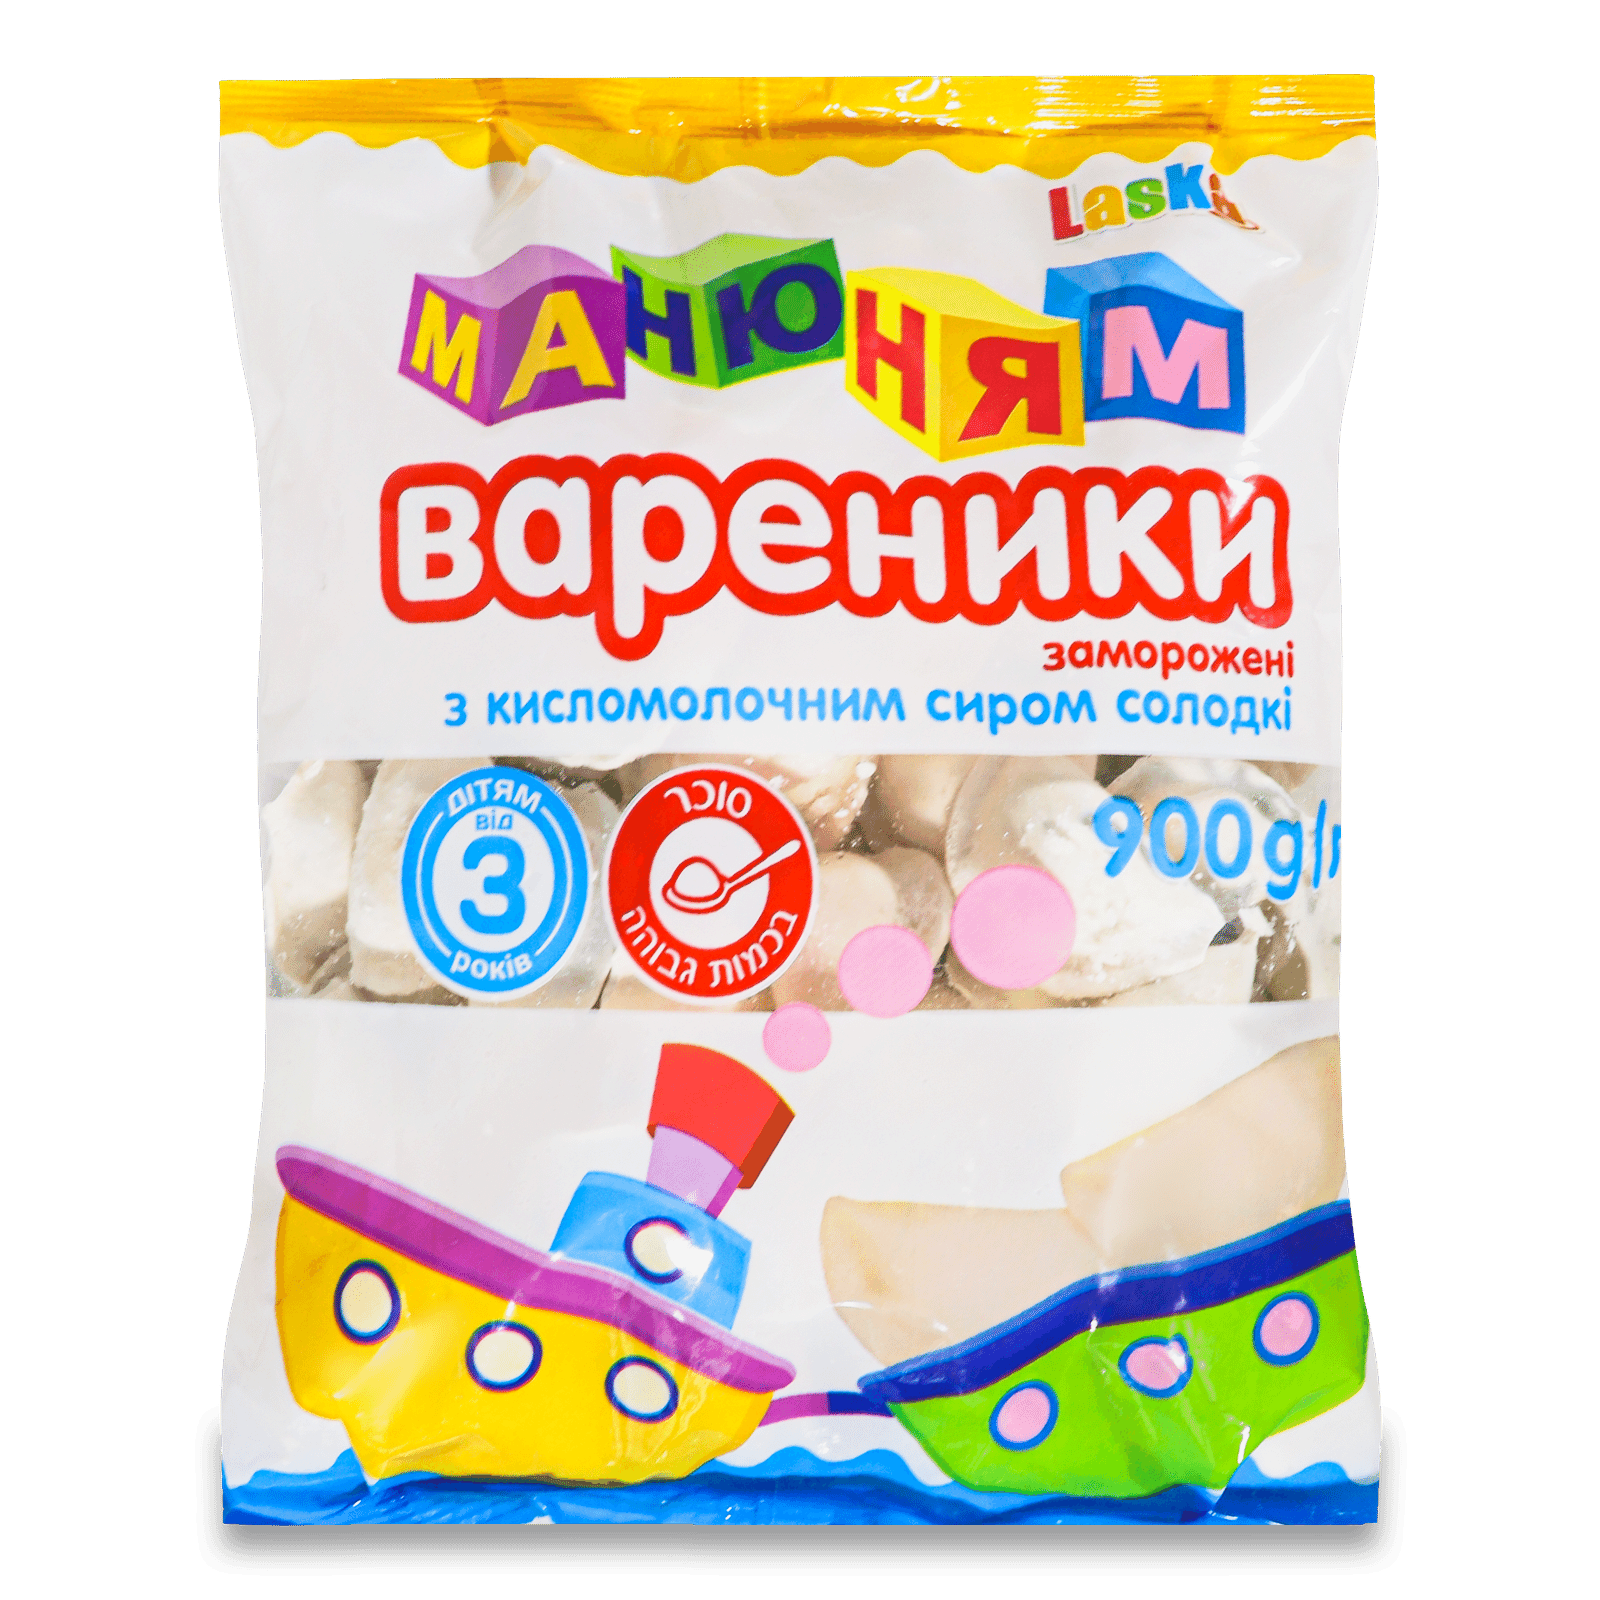 Варенички Laska «Ма-ню-ням» з солодким сиром - 1